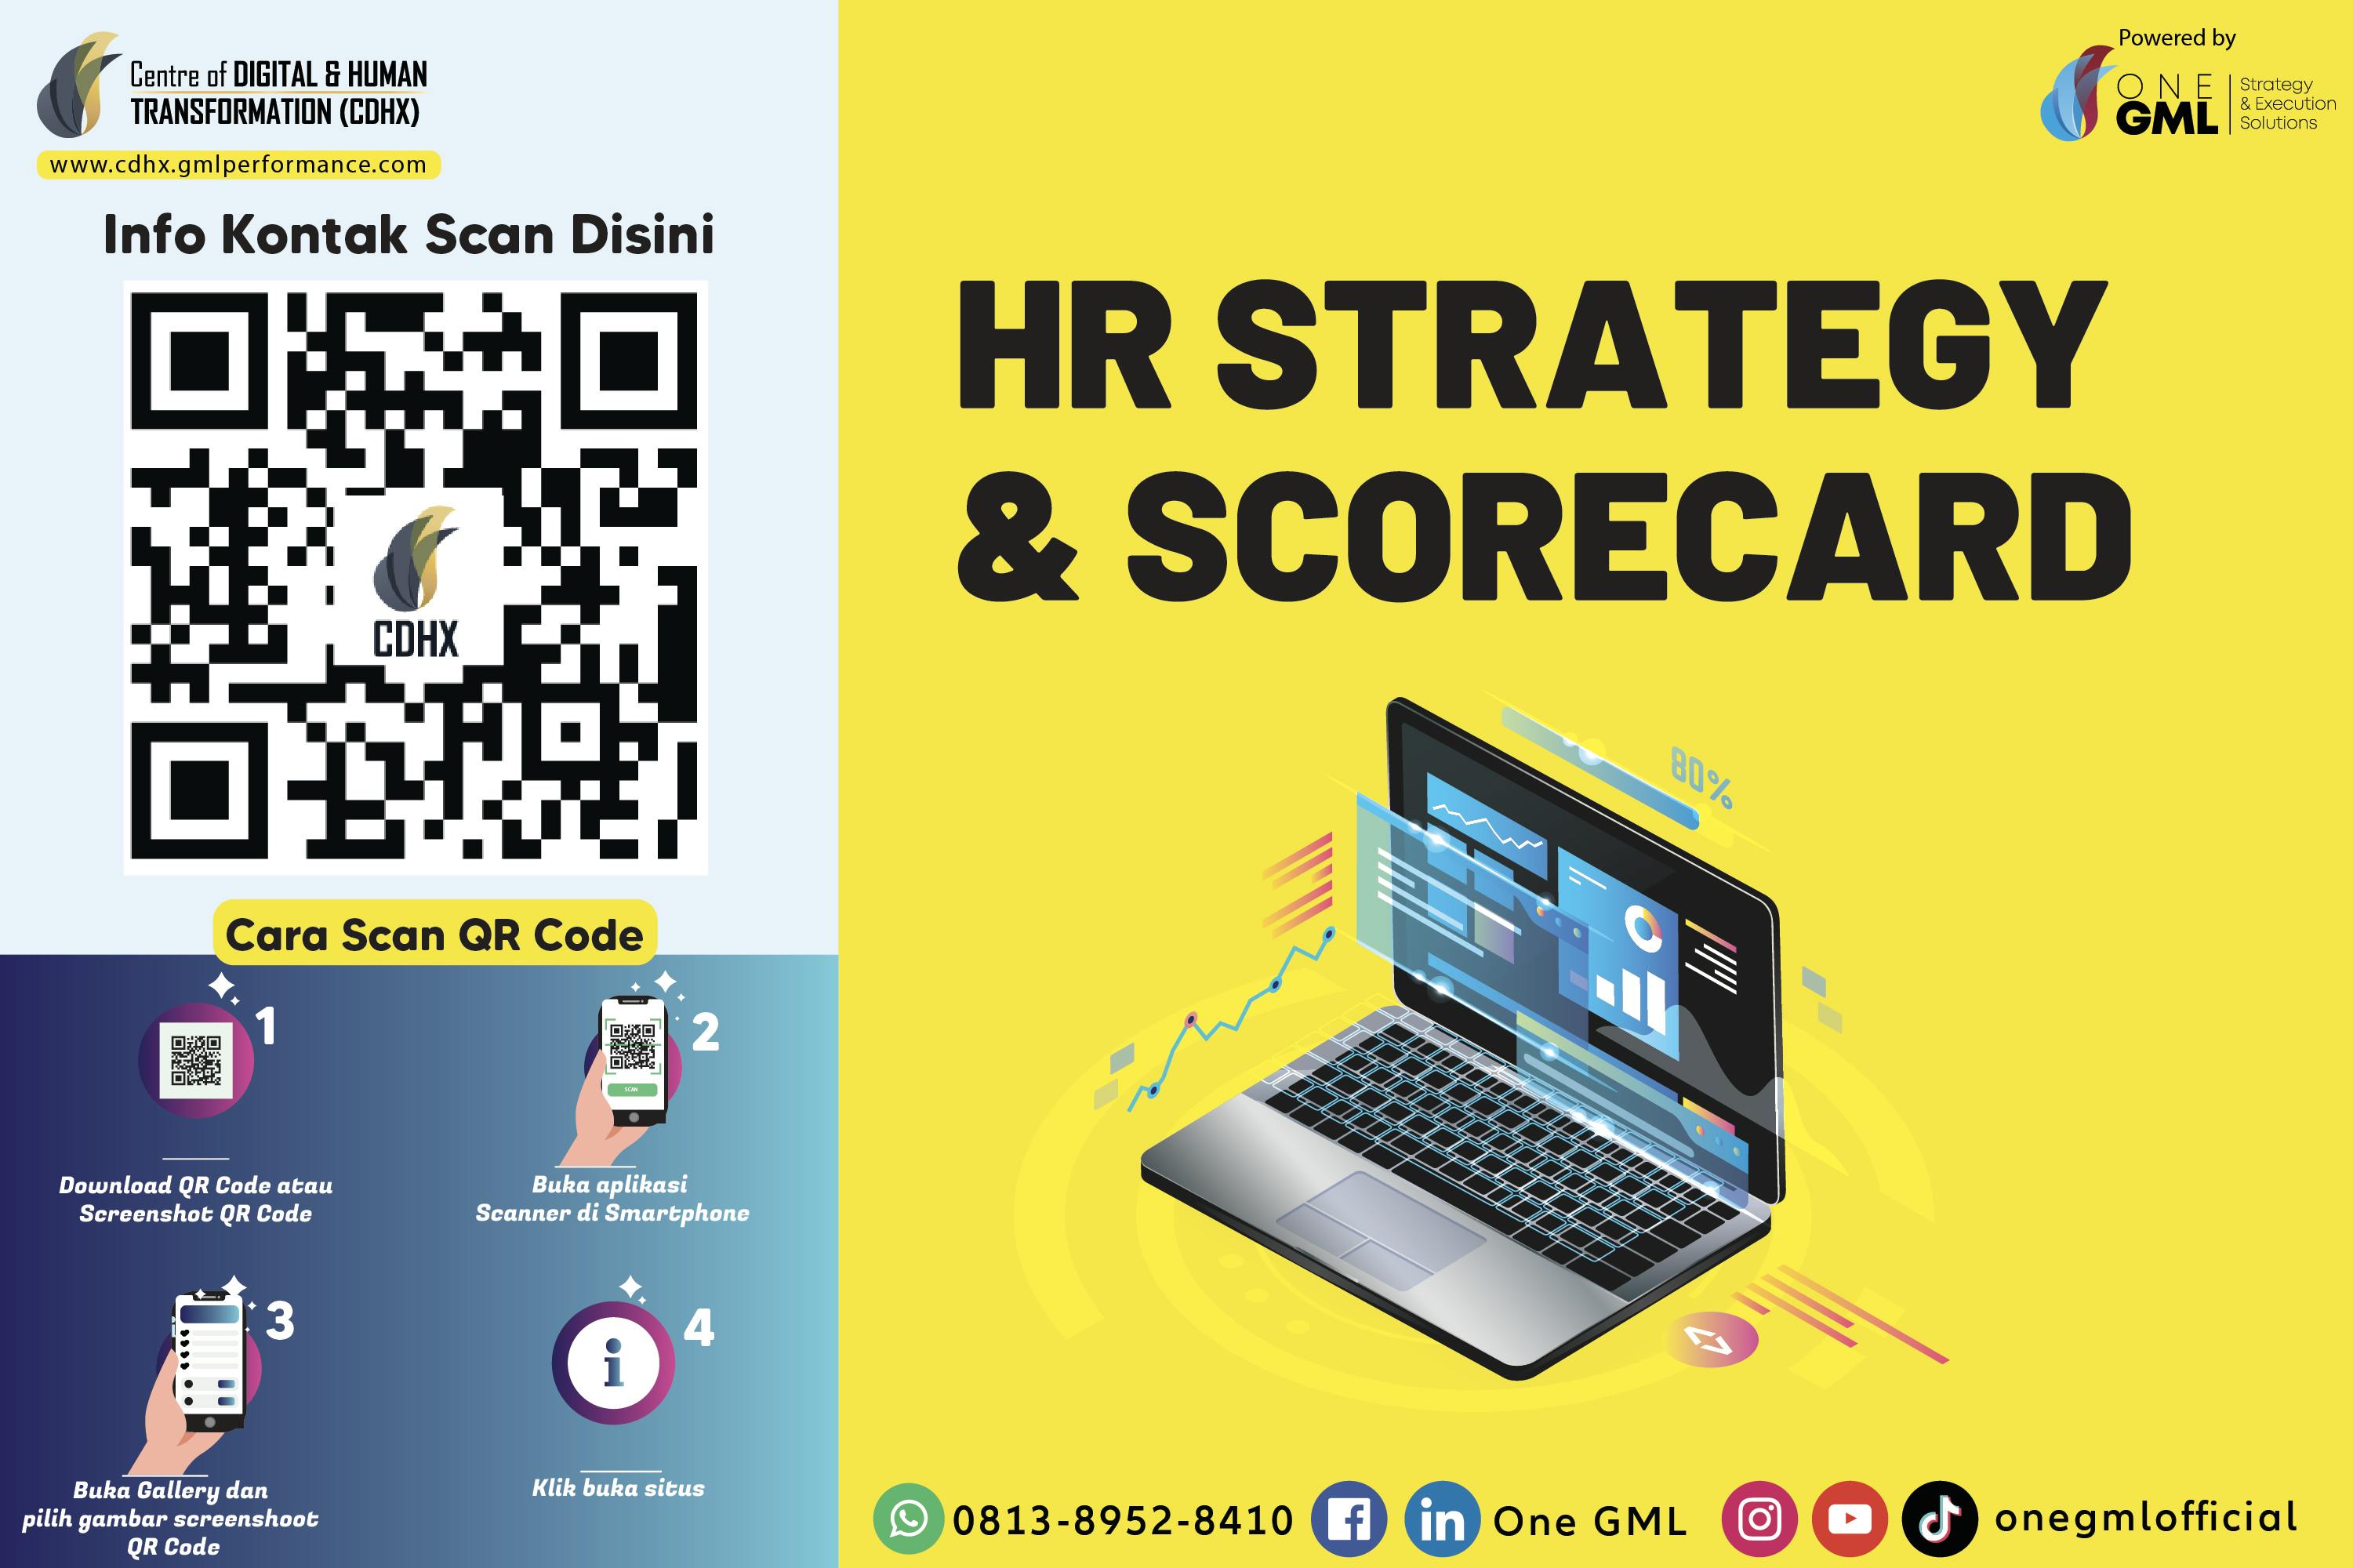 HR Strategy and Scorecard